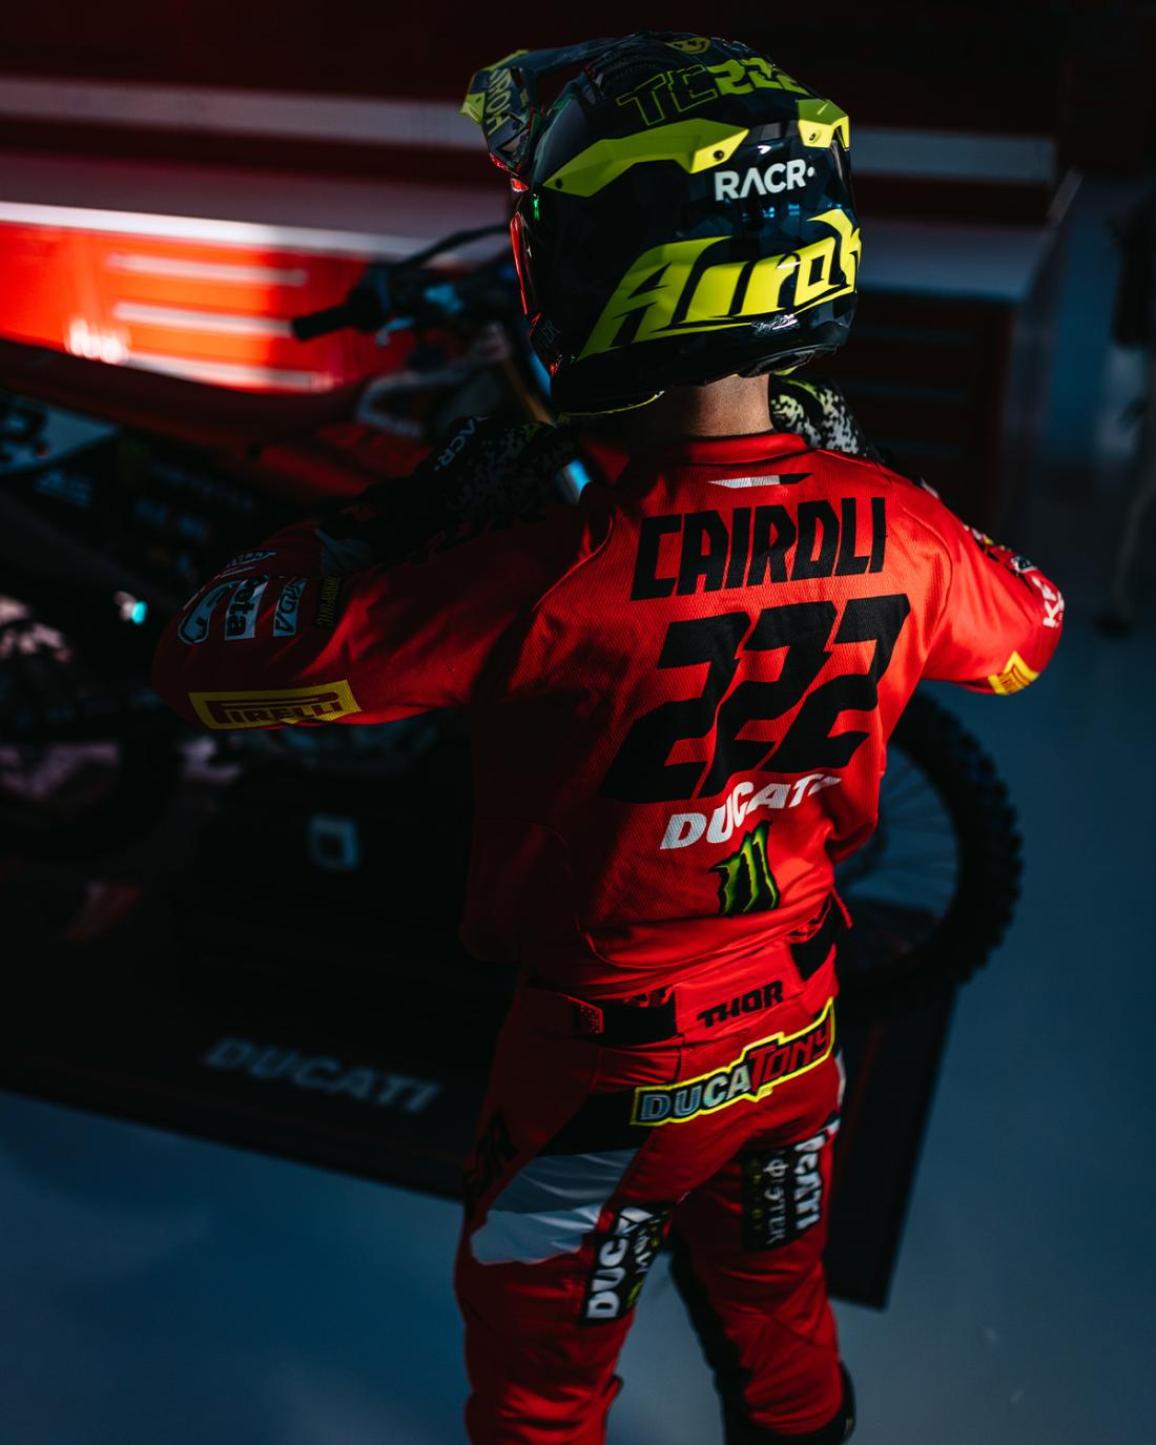 Ducati Desmo450 MX – “Μακάρι να υπήρχε τα χρόνια που αγωνιζόμουν” μας λέει ο Cairoli – [VIDEO]